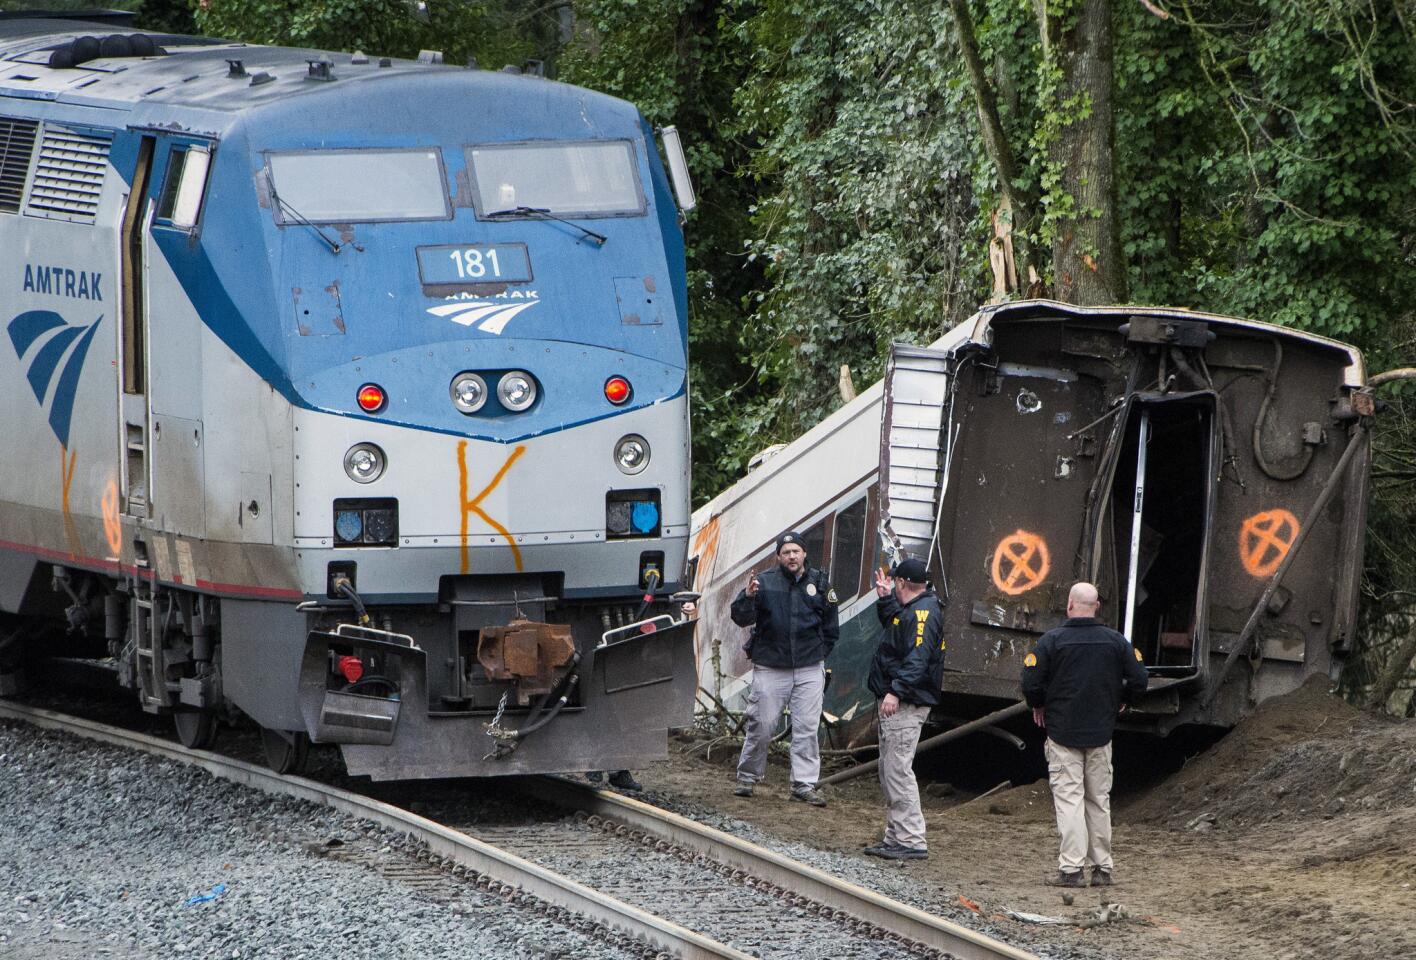 Emergency crews respond after an Amtrak train derailed on Dec. 18, 2017, in DuPont, Wash.